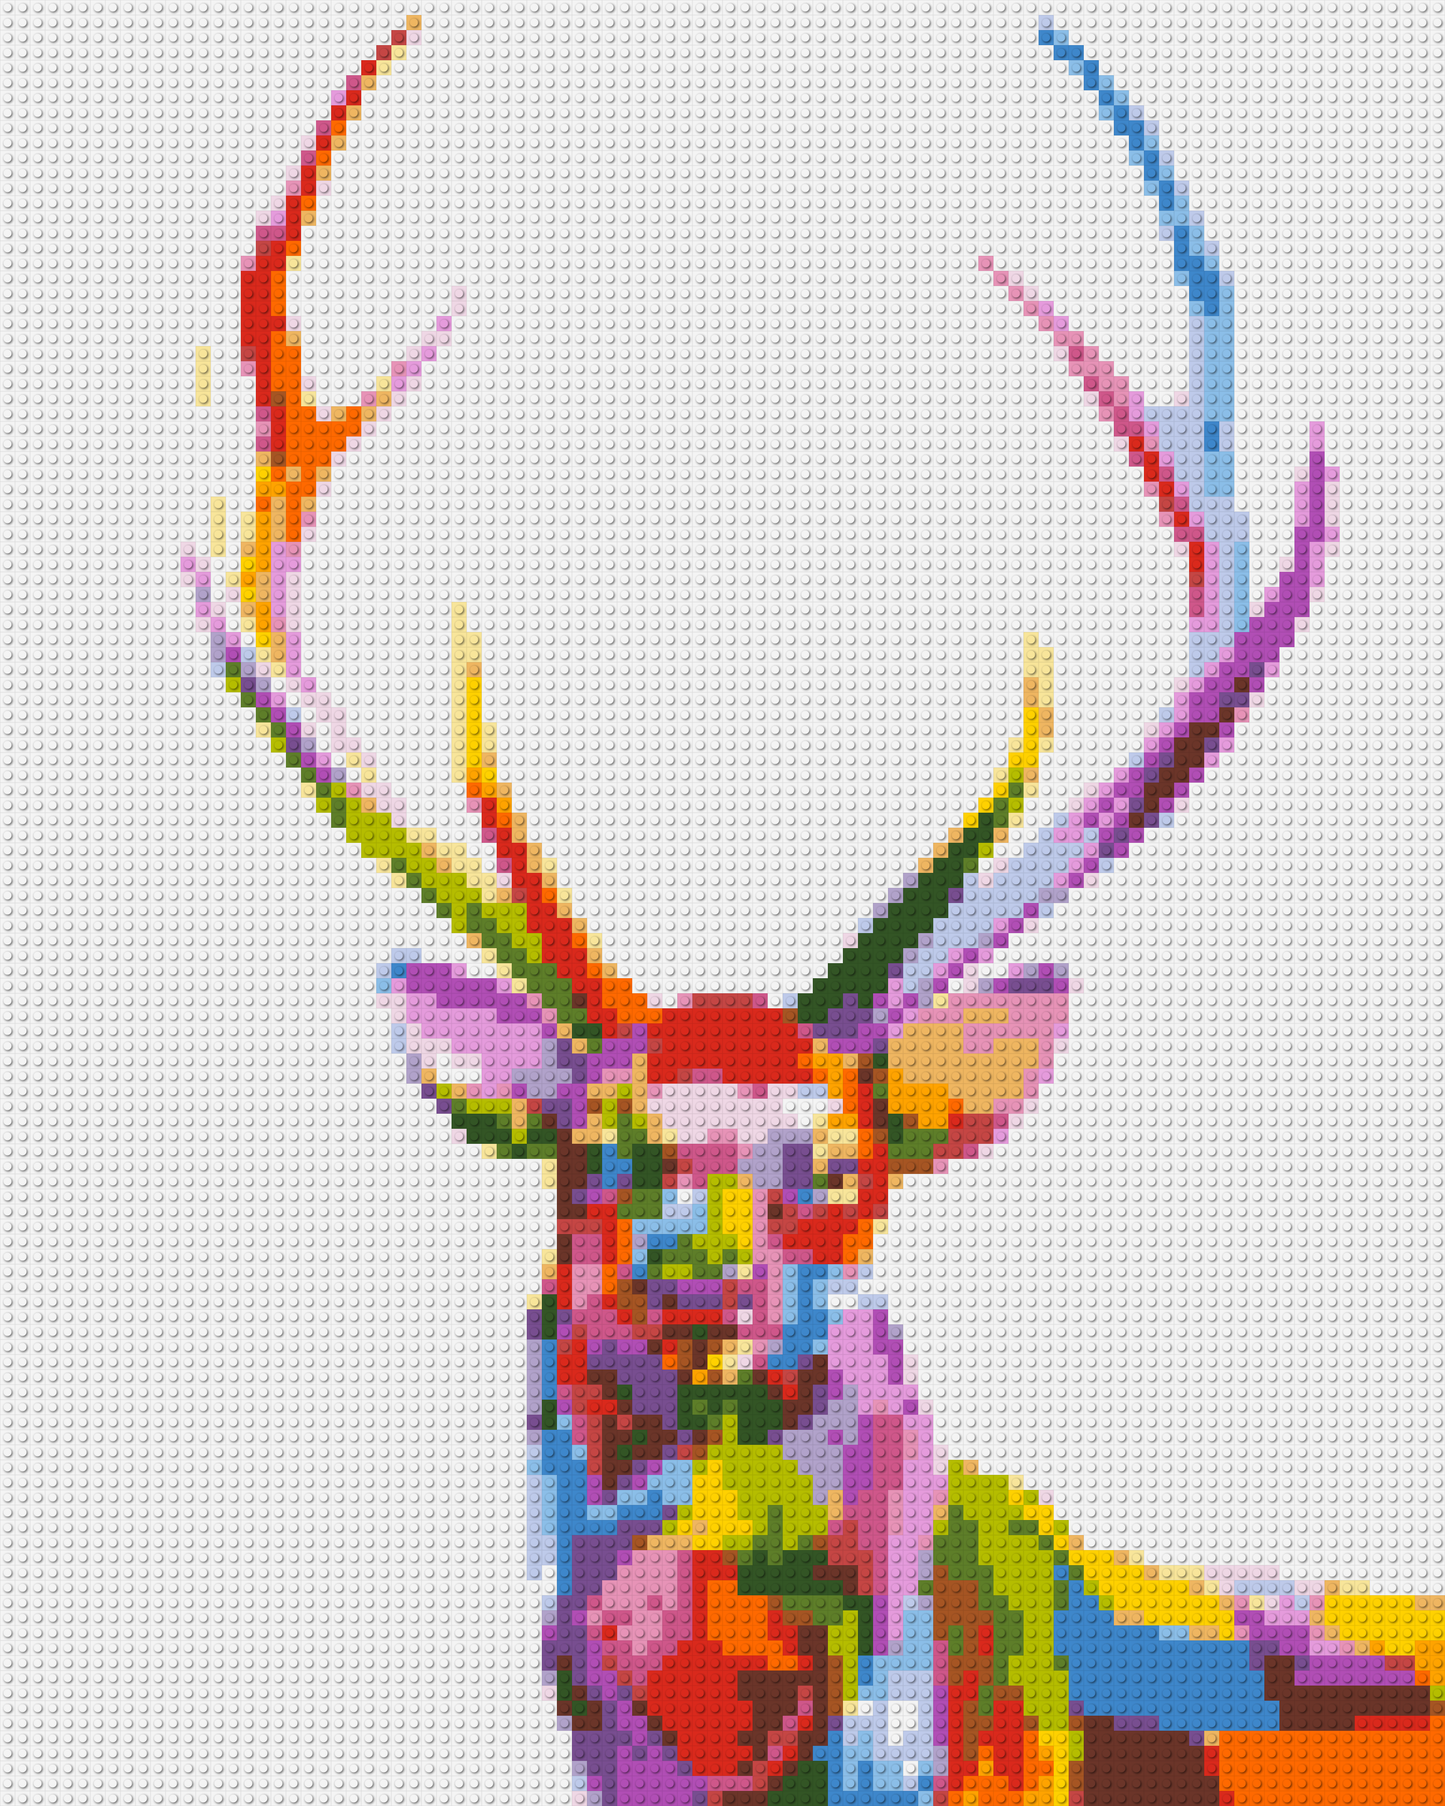 Stag Colourful Pop Art - Brick Art Mosaic Kit